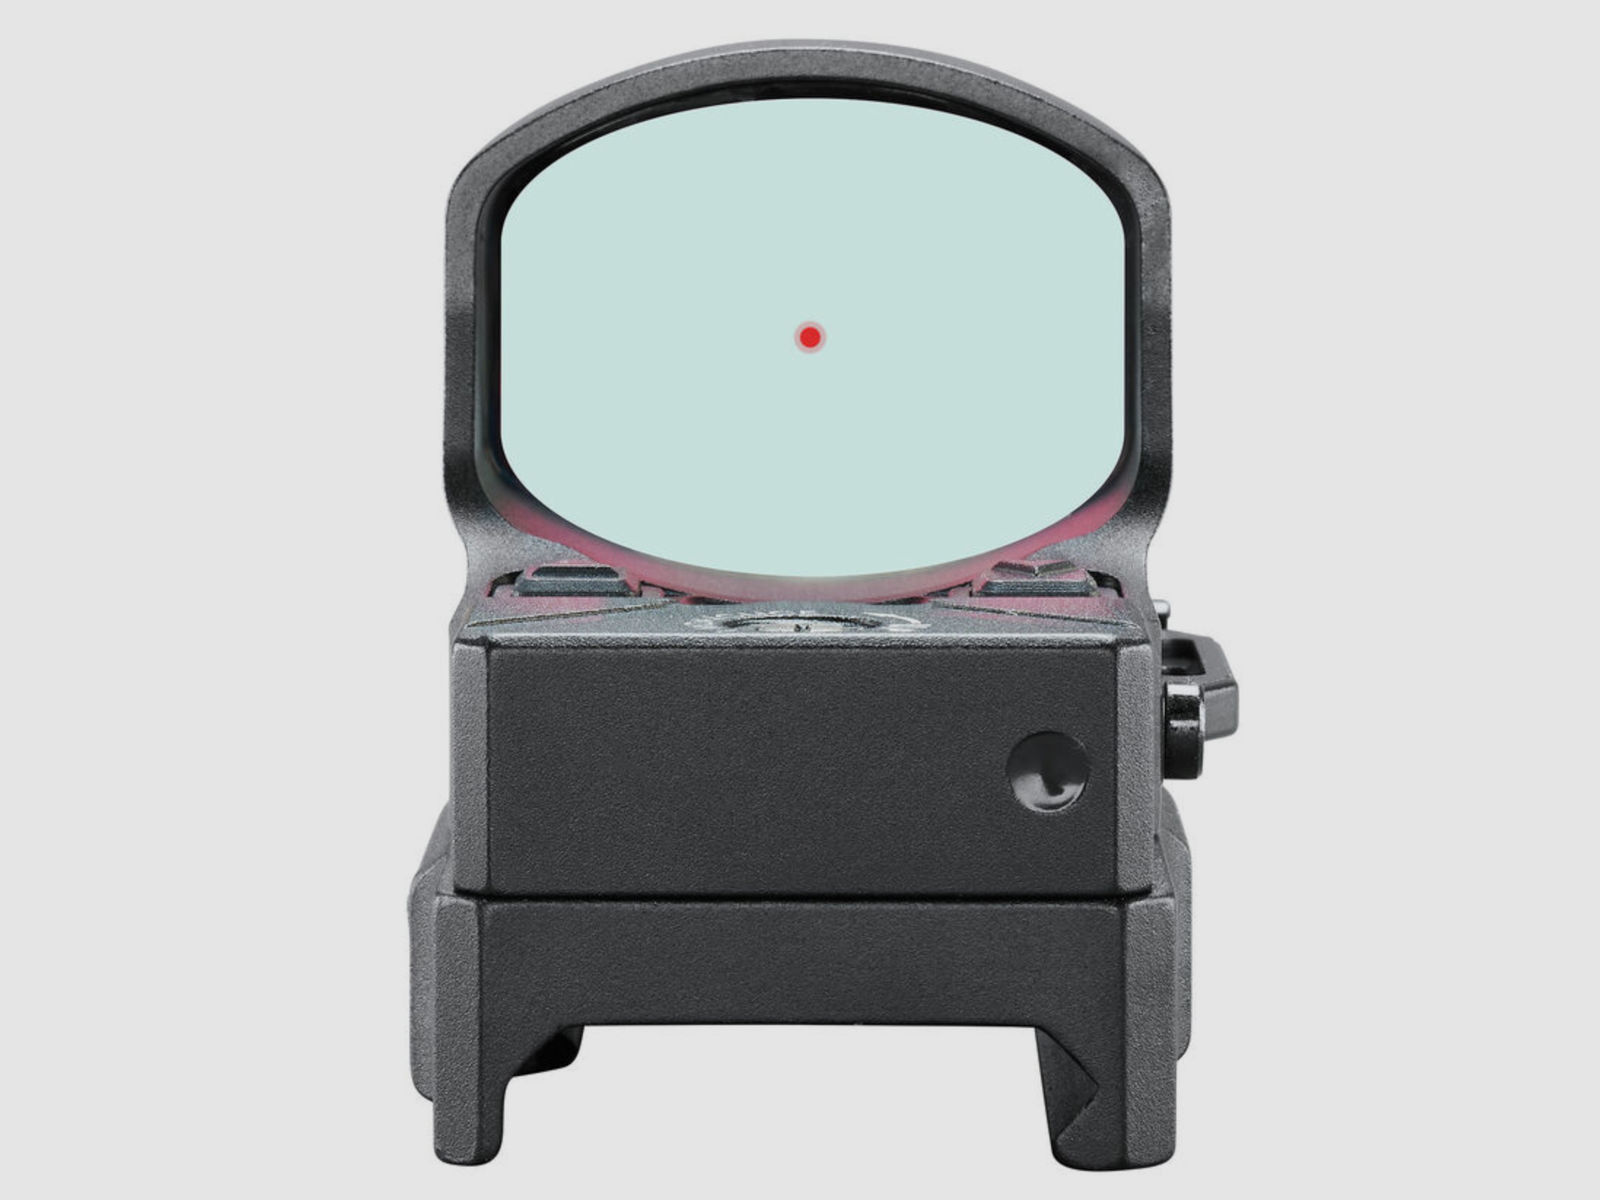 Bushnell TAR71XRS Reflex Sight First Strike 2.0 1x28mm 3 MOA Dot Reticle